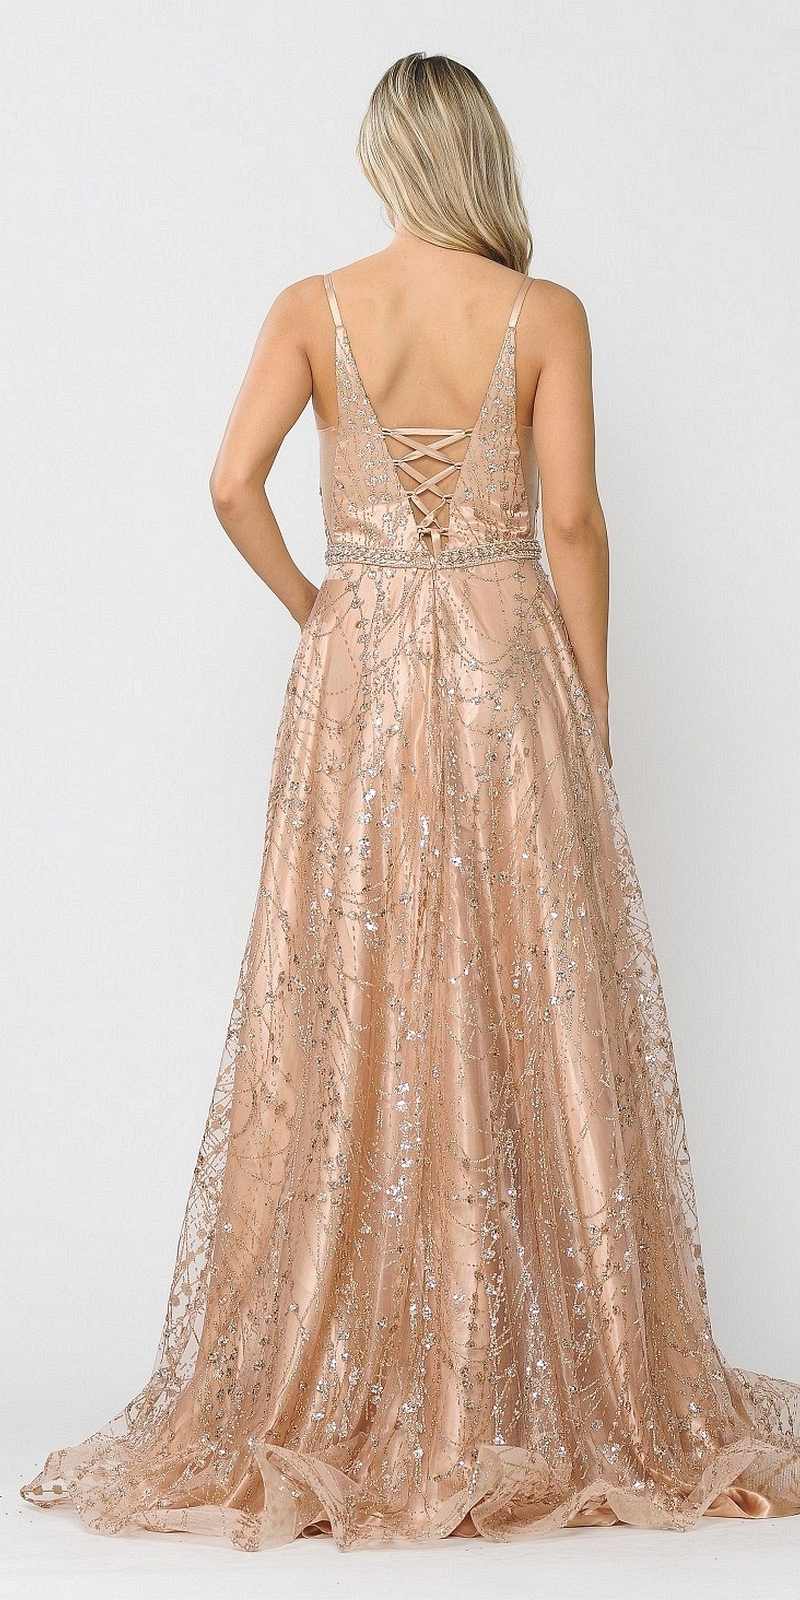 Poly USA 8450 Lace-Up Back Glittery A-Line Long Prom Dress Rose Gold